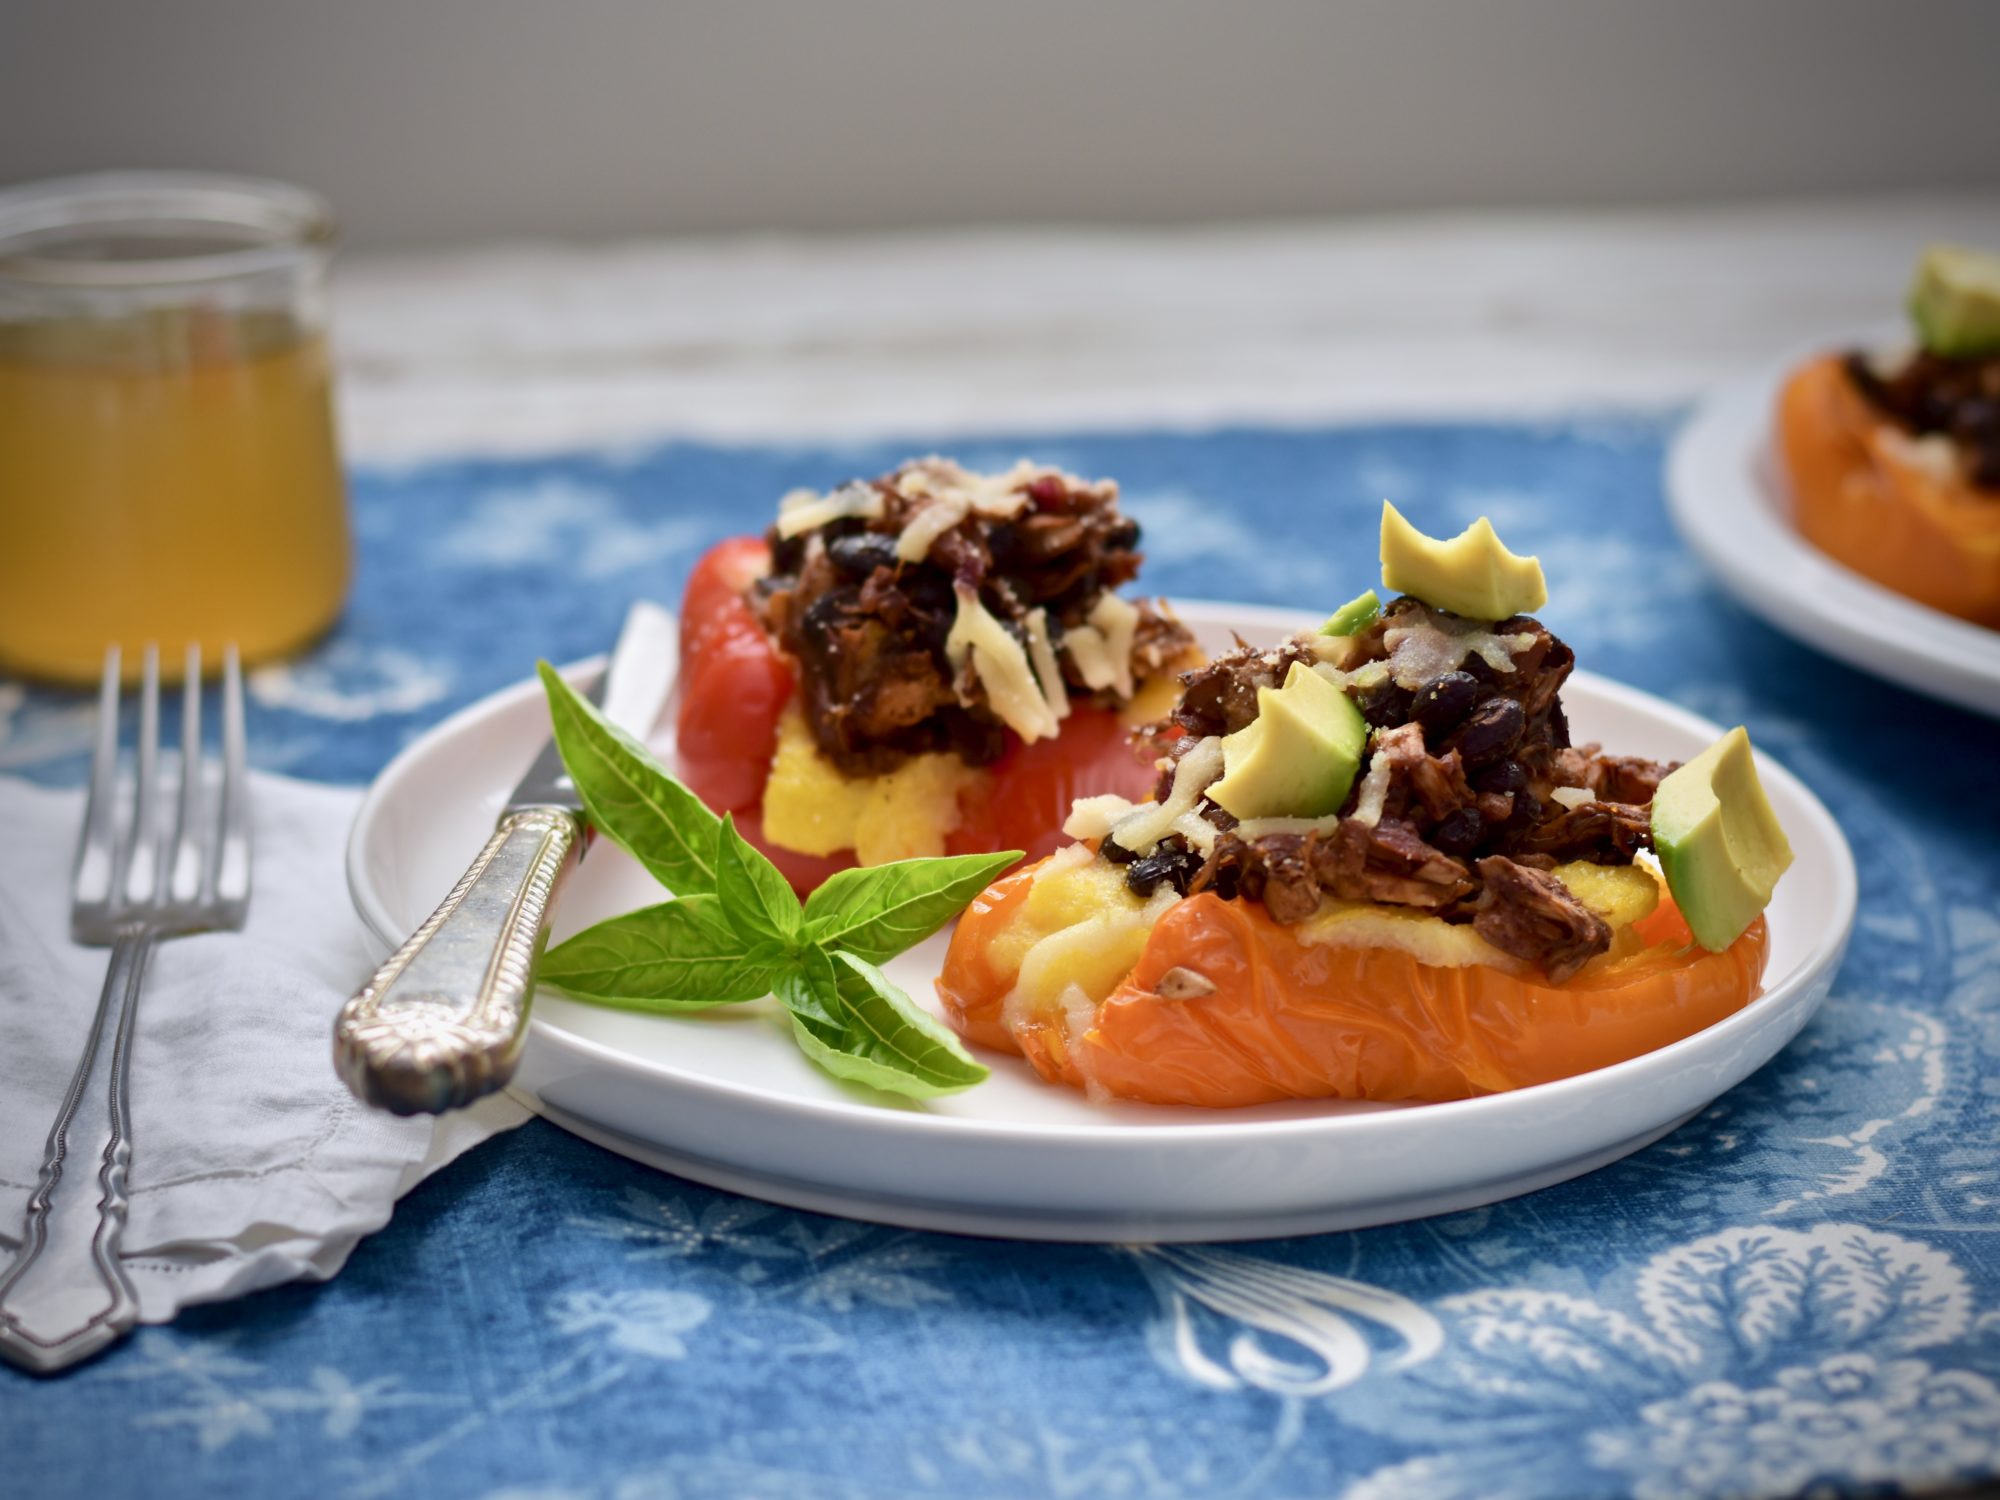 BBQ jackfruit and polenta stuffed peppers